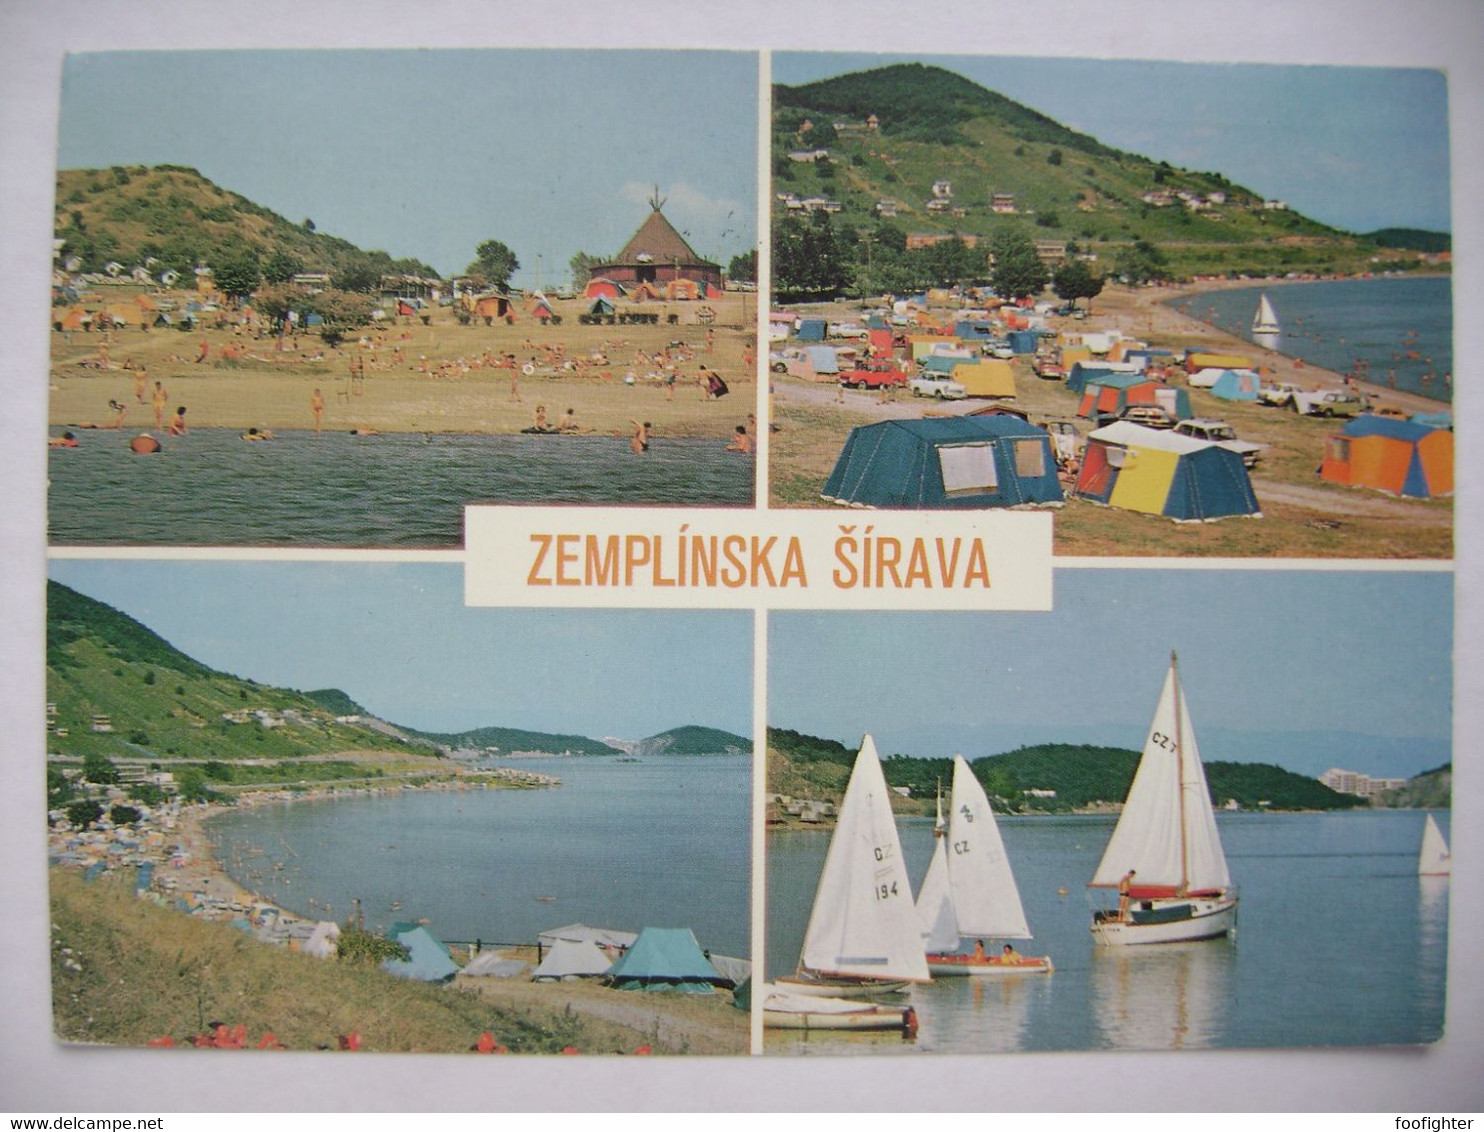 Zemplinska Sirava - Okres Michalovce, Plaz, Camping, Horka, Jachting - Posted 1985 - Slovakia